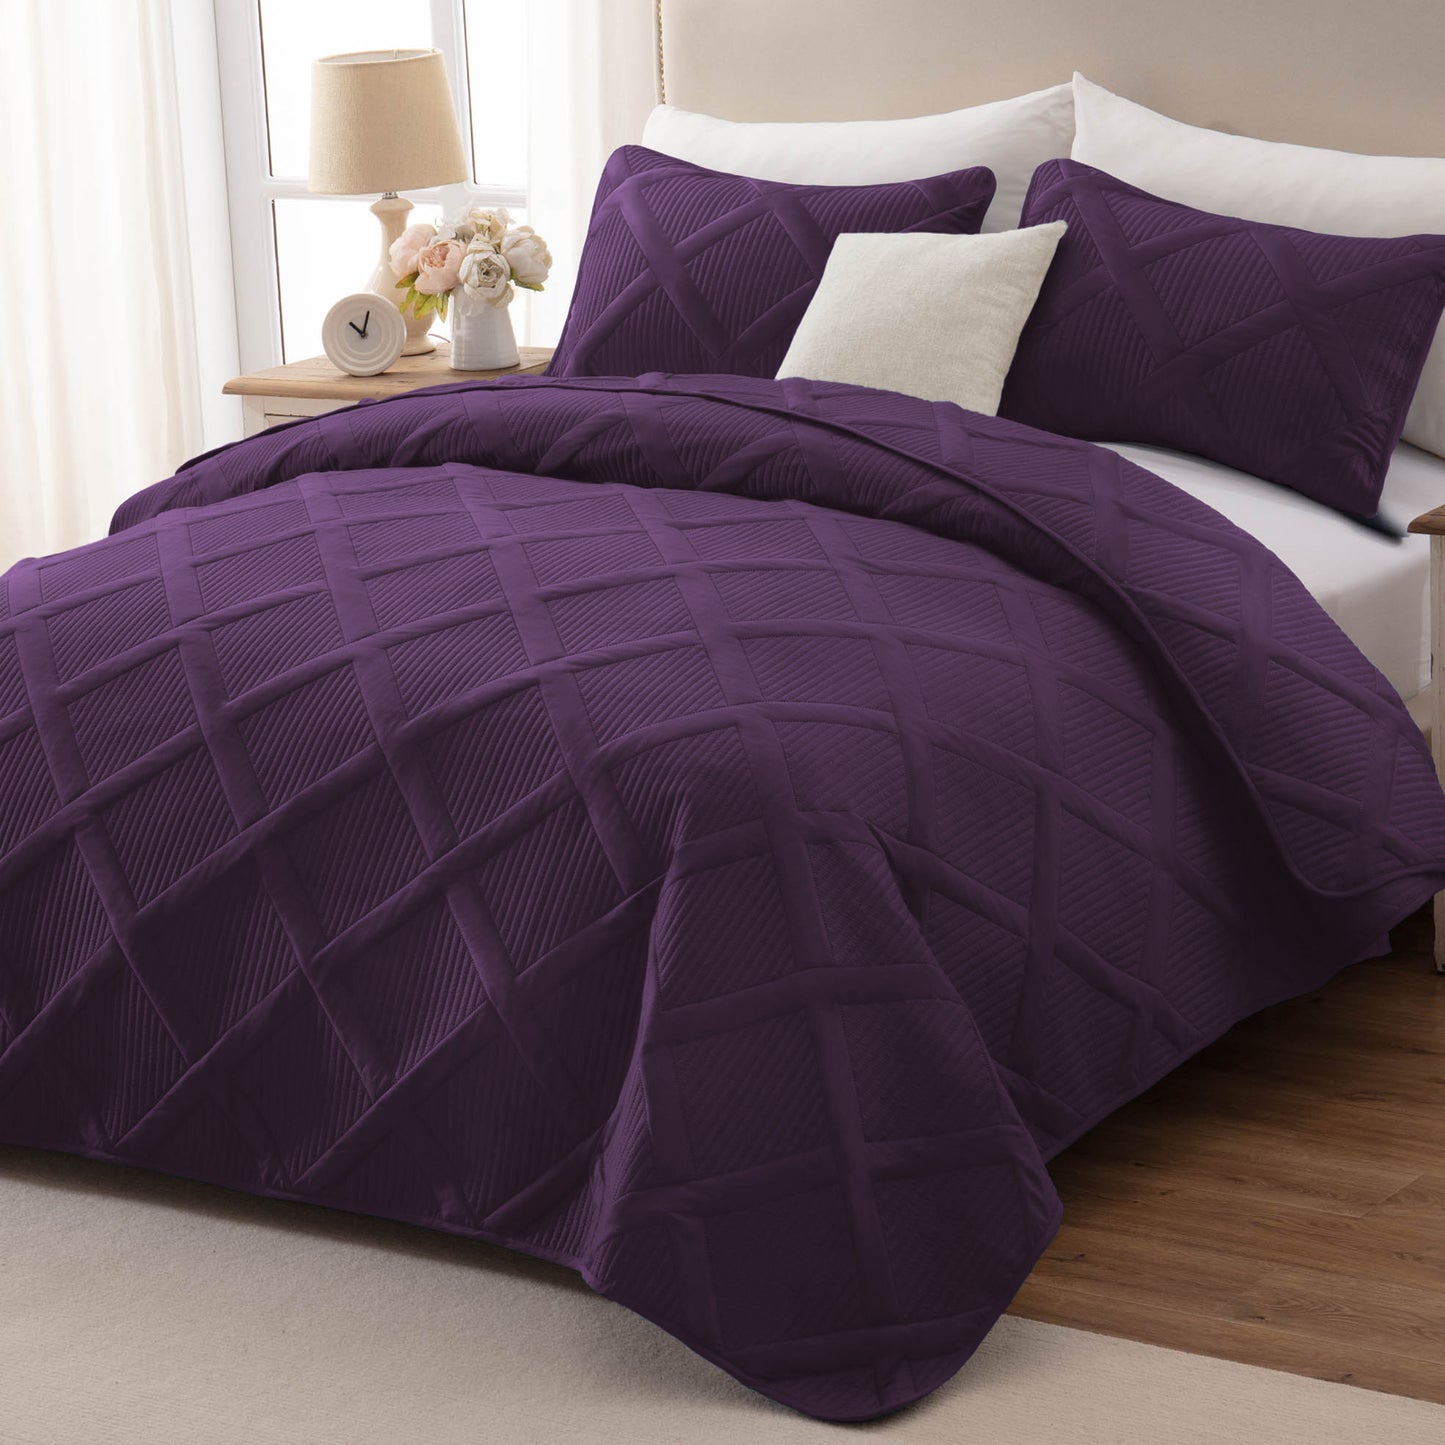 Exclusivo Mezcla Ultrasonic King Quilt Set, Lightweight Bedspreads Modern Striped Coverlet with 2 Pillow Shams, Deep Purple